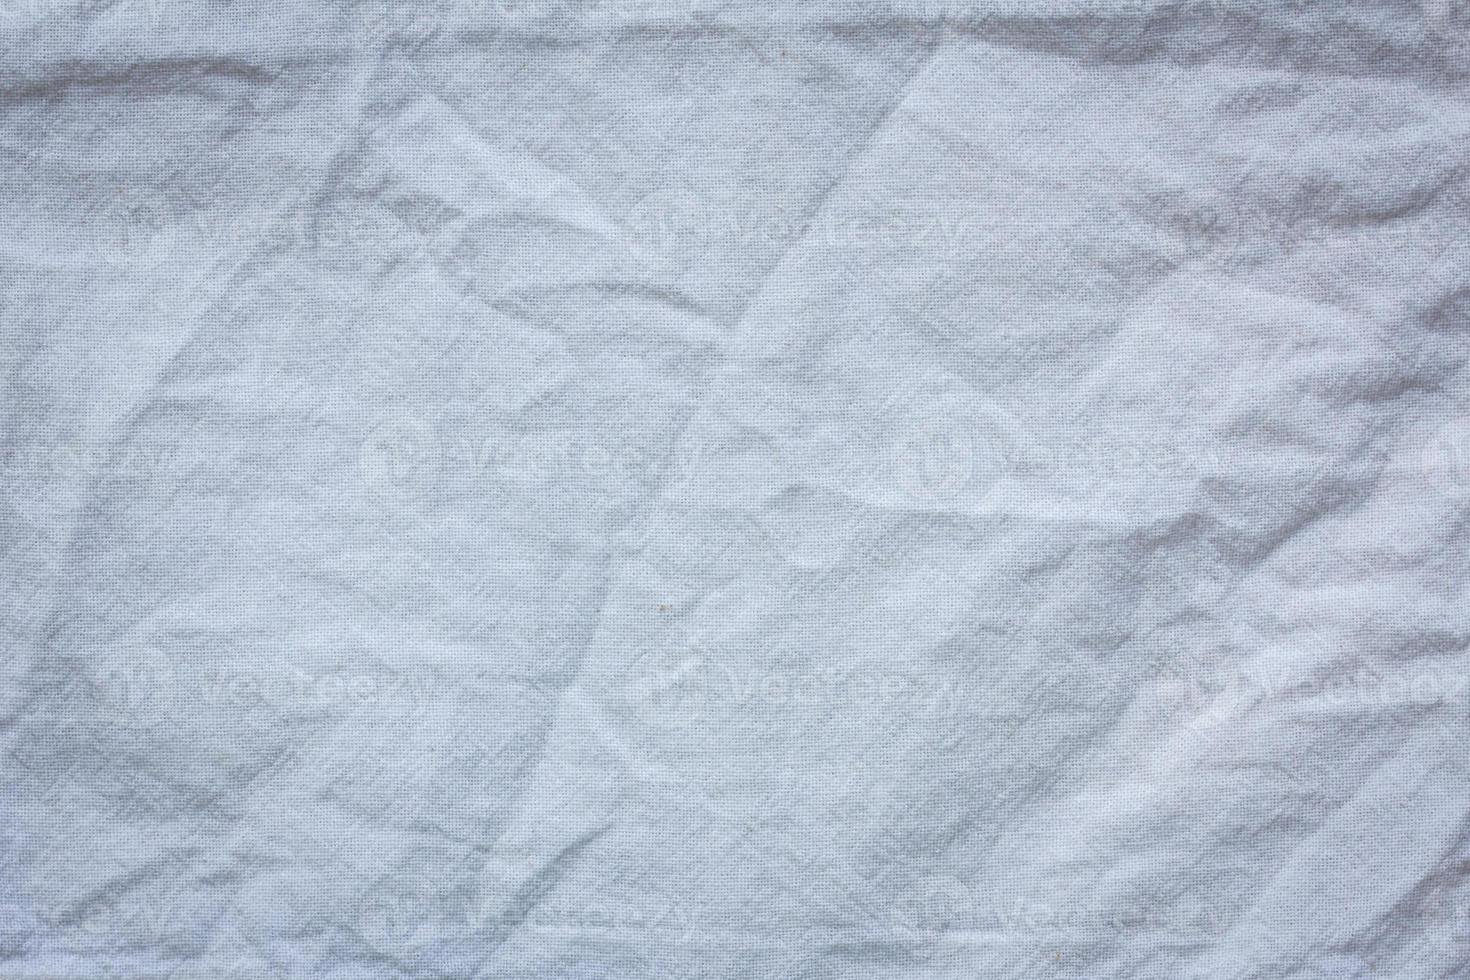 white crumpled cloth textile texture background photo